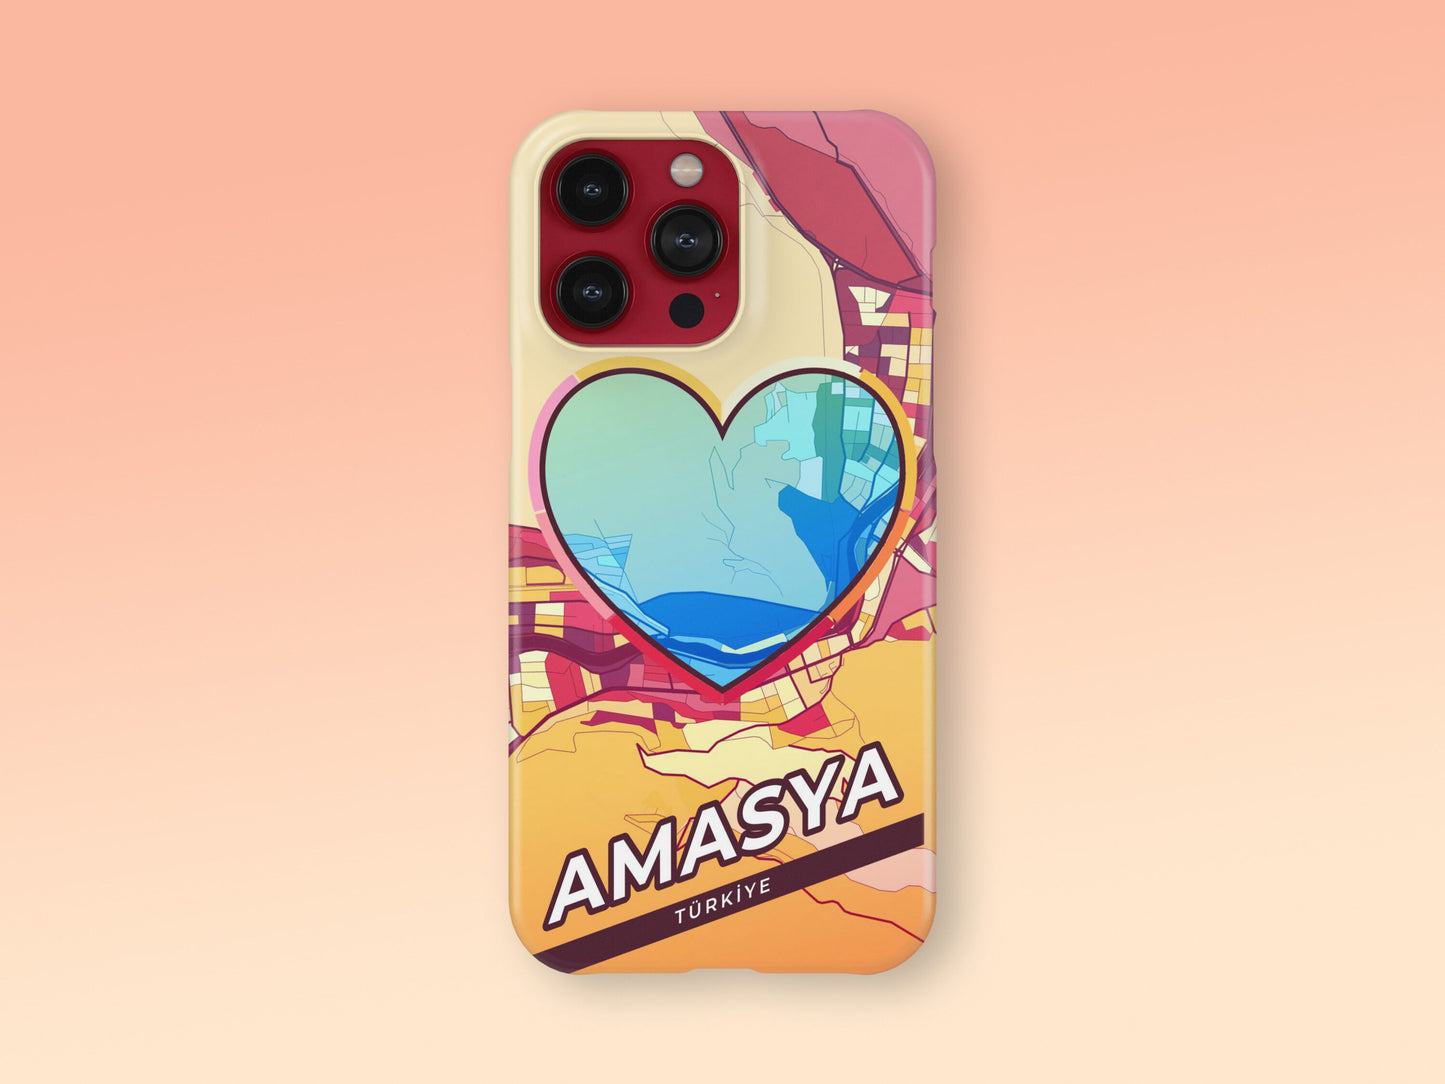 Amasya Turkey slim phone case with colorful icon. Birthday, wedding or housewarming gift. Couple match cases. 2